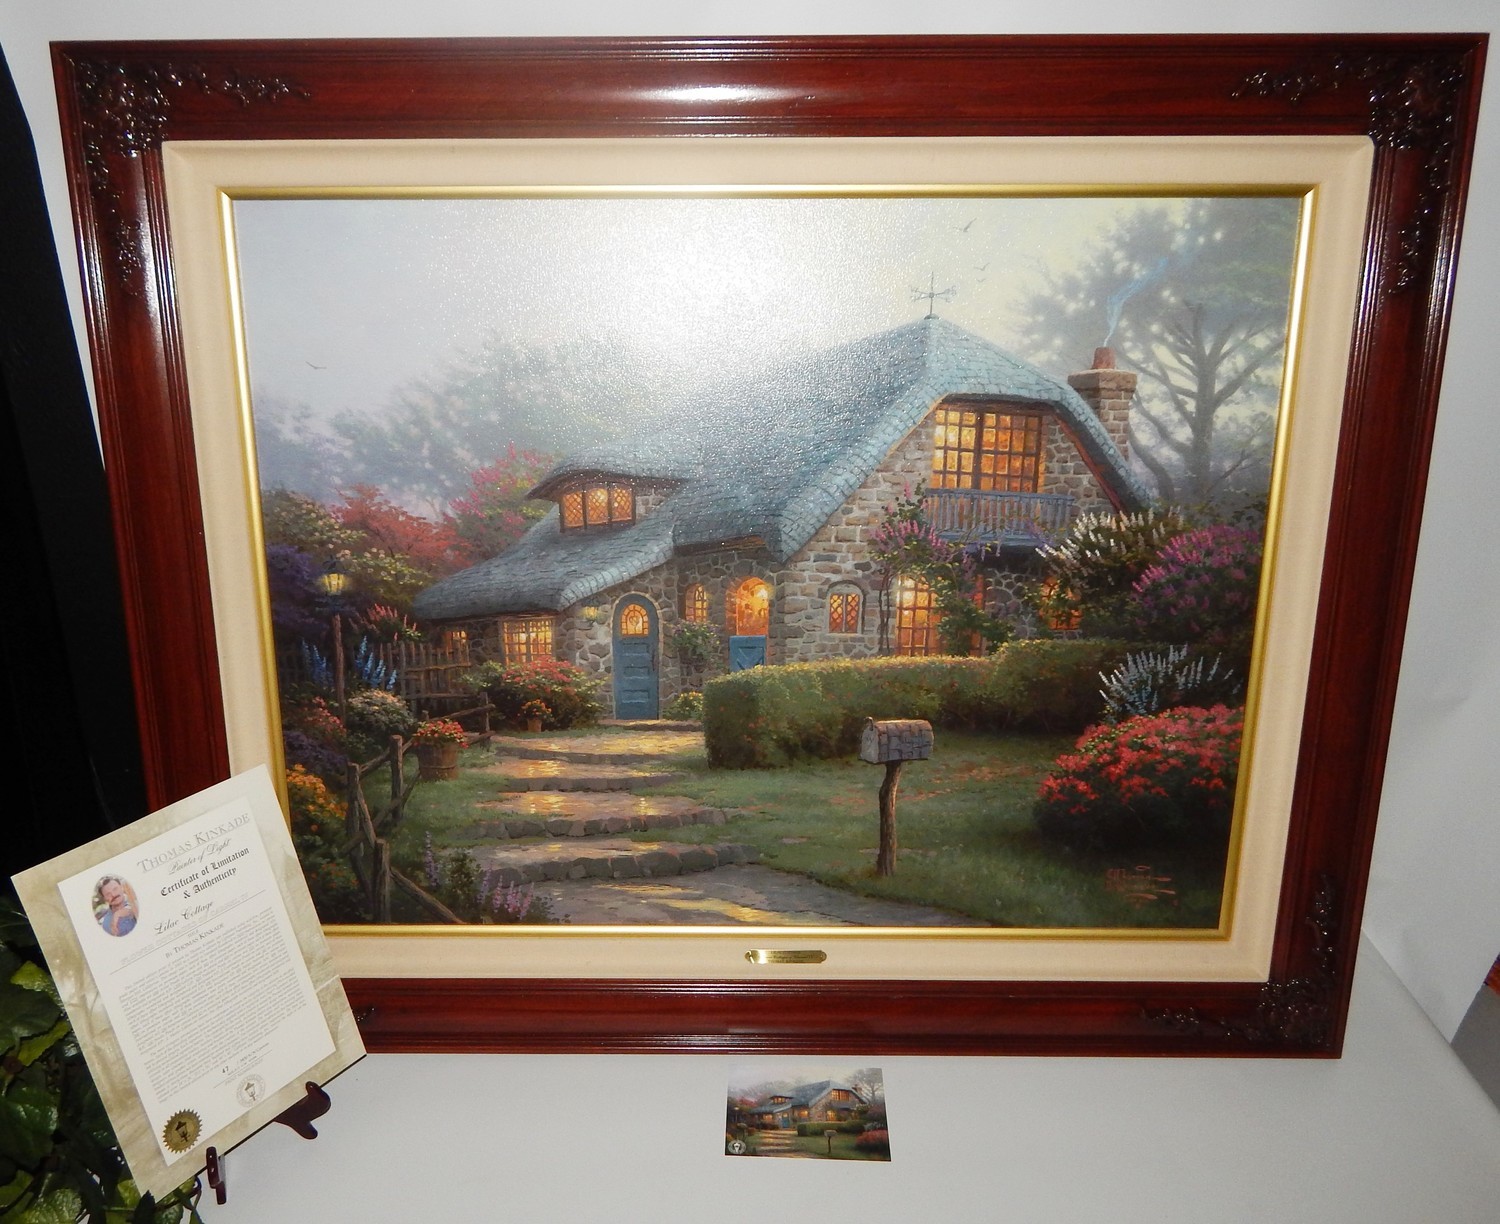 Thomas Kinkade "Lilac Cottage" 34x26 Lithograph on Canvas, Signed Twice #47/3450